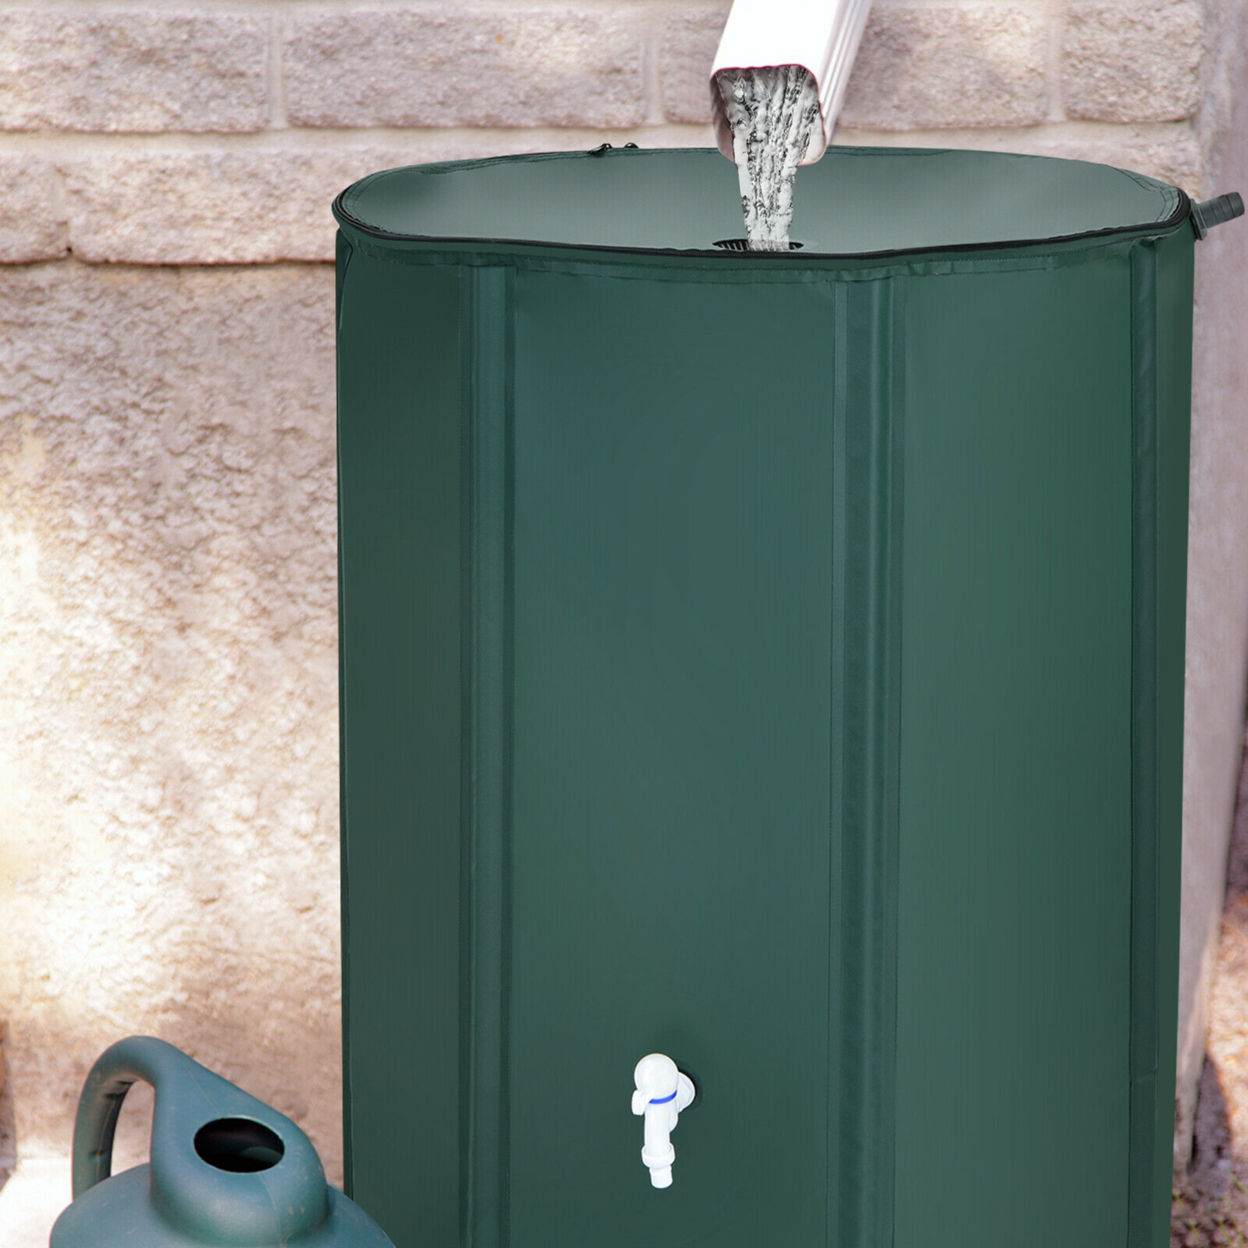 100 Gallon Portable Rain Barrel Water Collector CollapsibleTank W /Spigot Filter